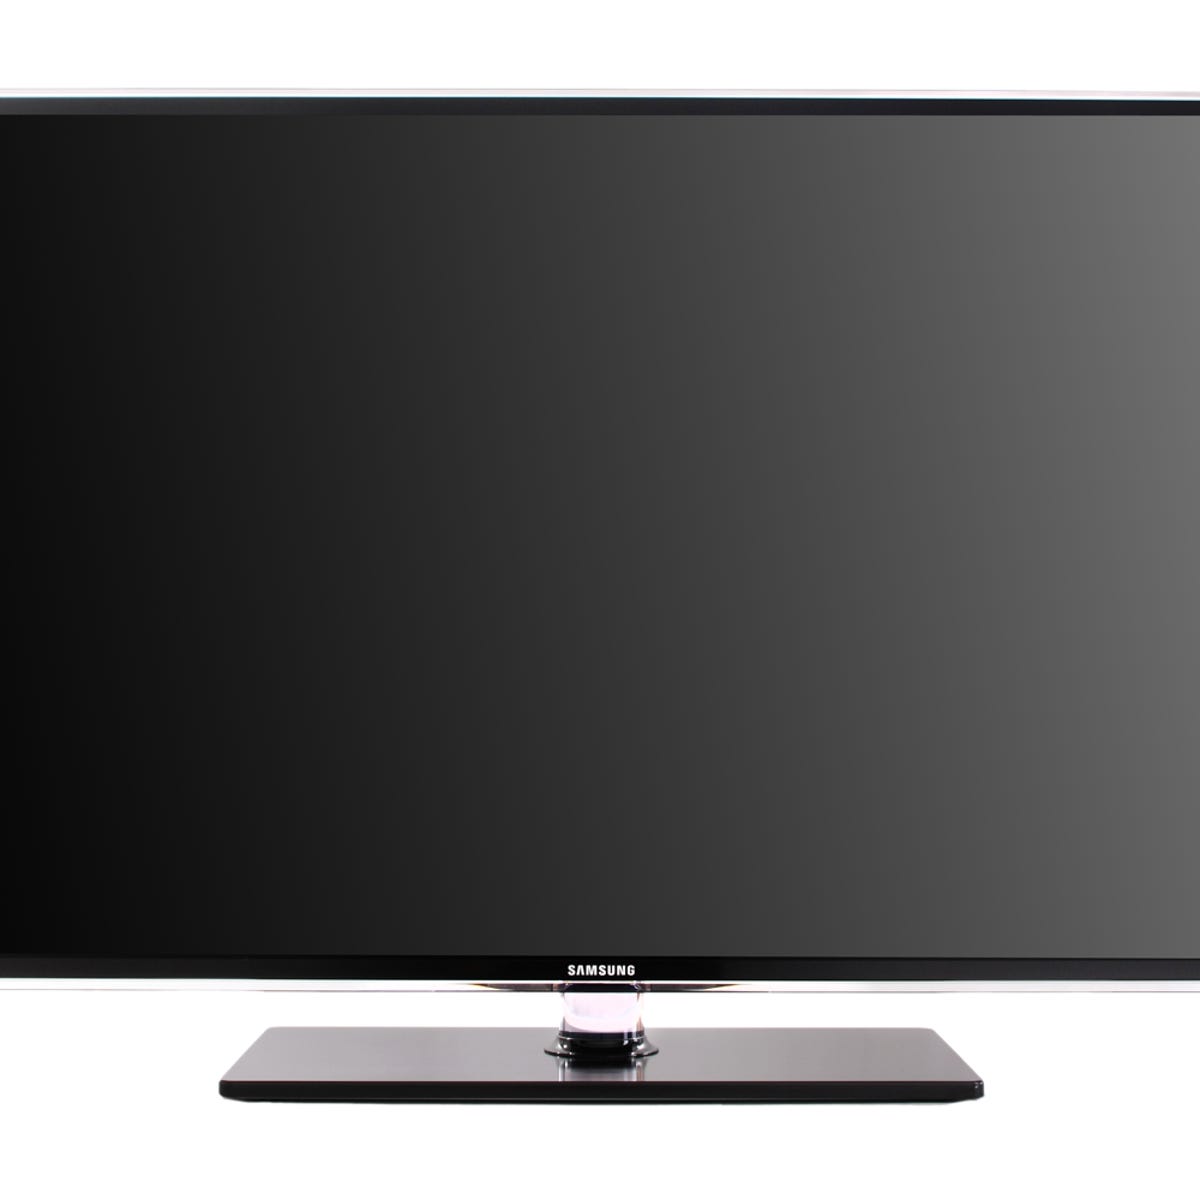 Первый плоский телевизор. Плазменная панель LG 50ps7000. Телевизор сони бравиа 55. KDL-55nx720. Телевизор самсунг Bravia.